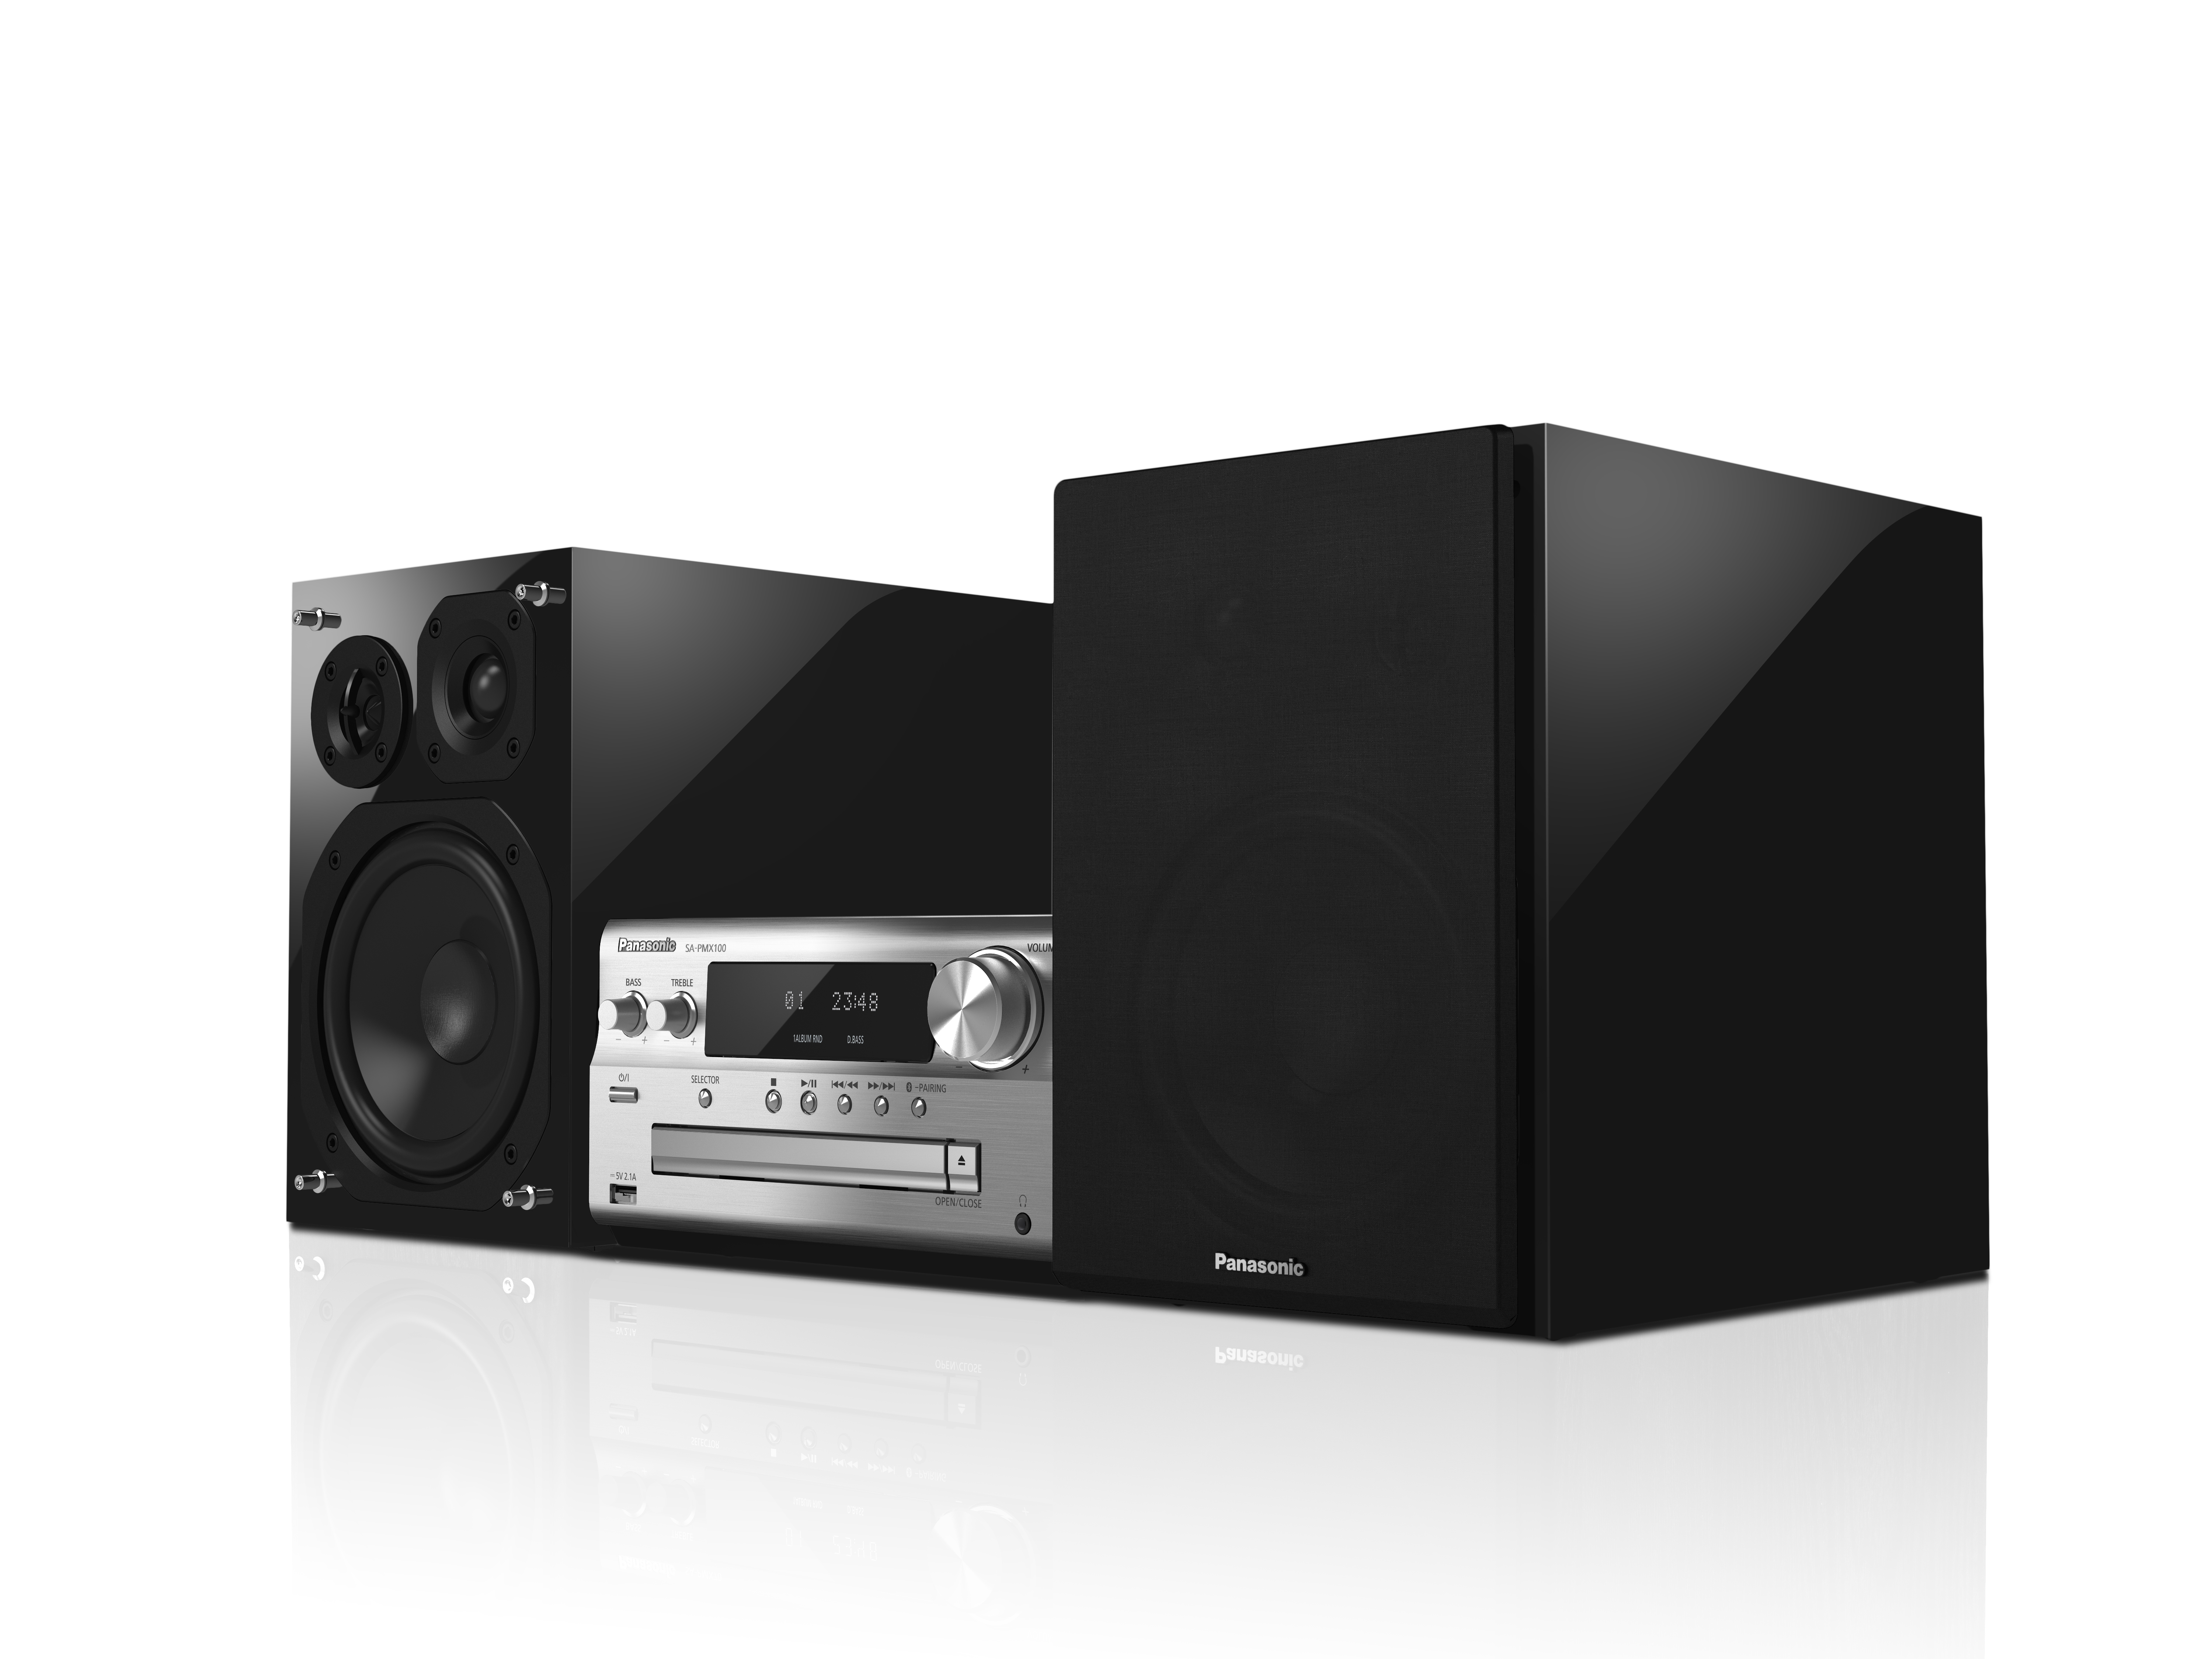 Panasonic launches network-capable stereo equipment with full multiroom streaming